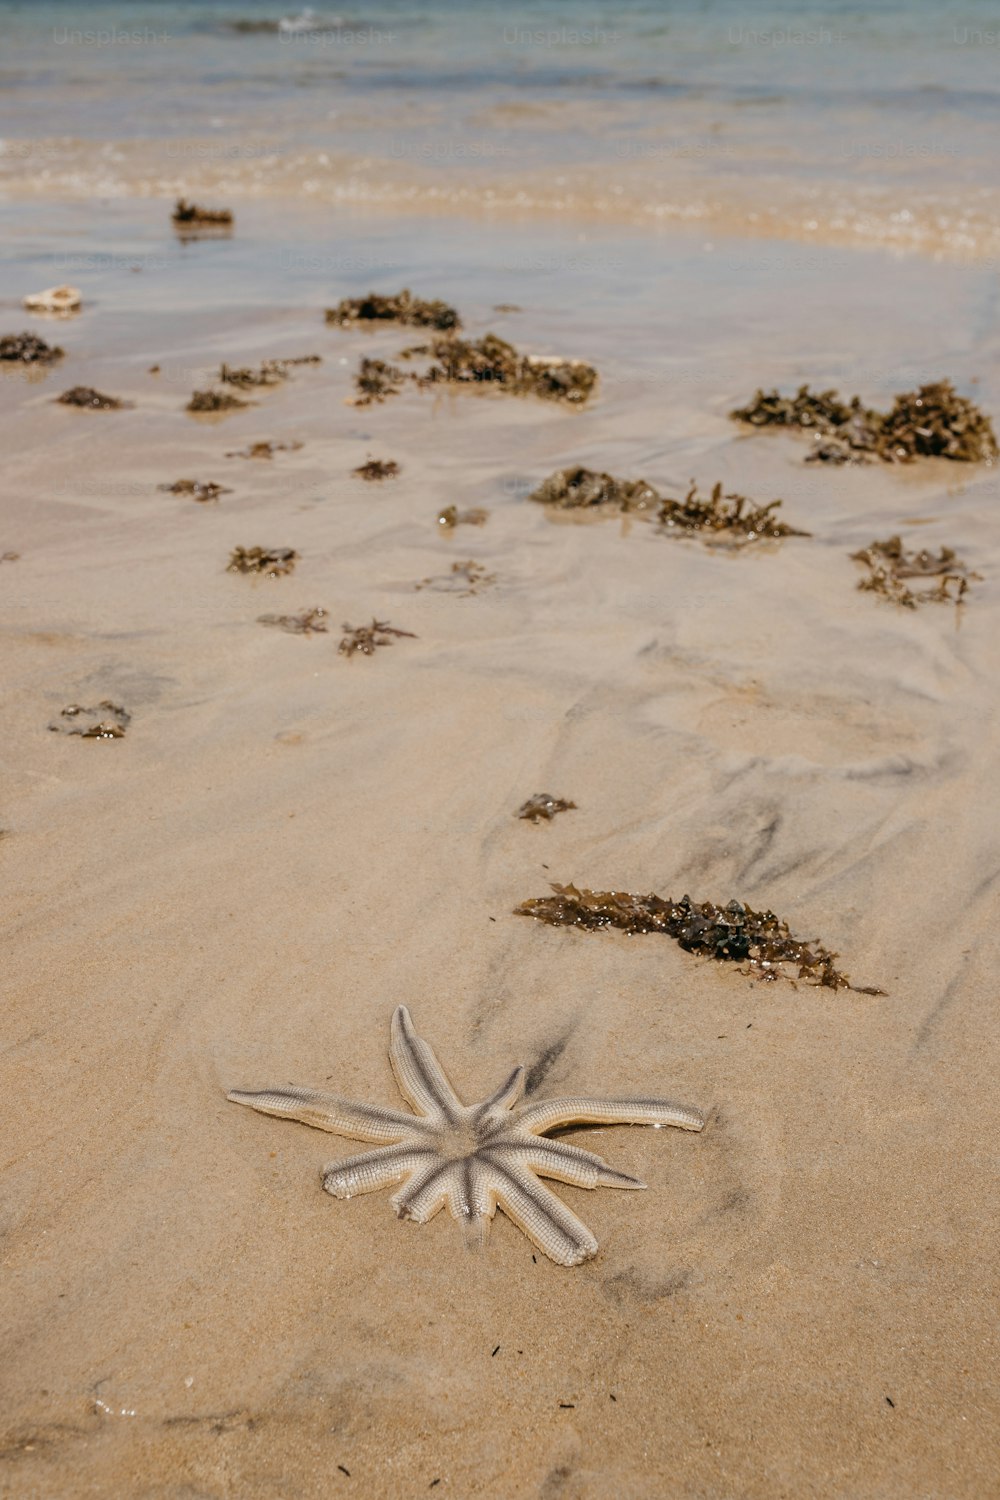 Una estrella de mar tendida en la arena de la playa